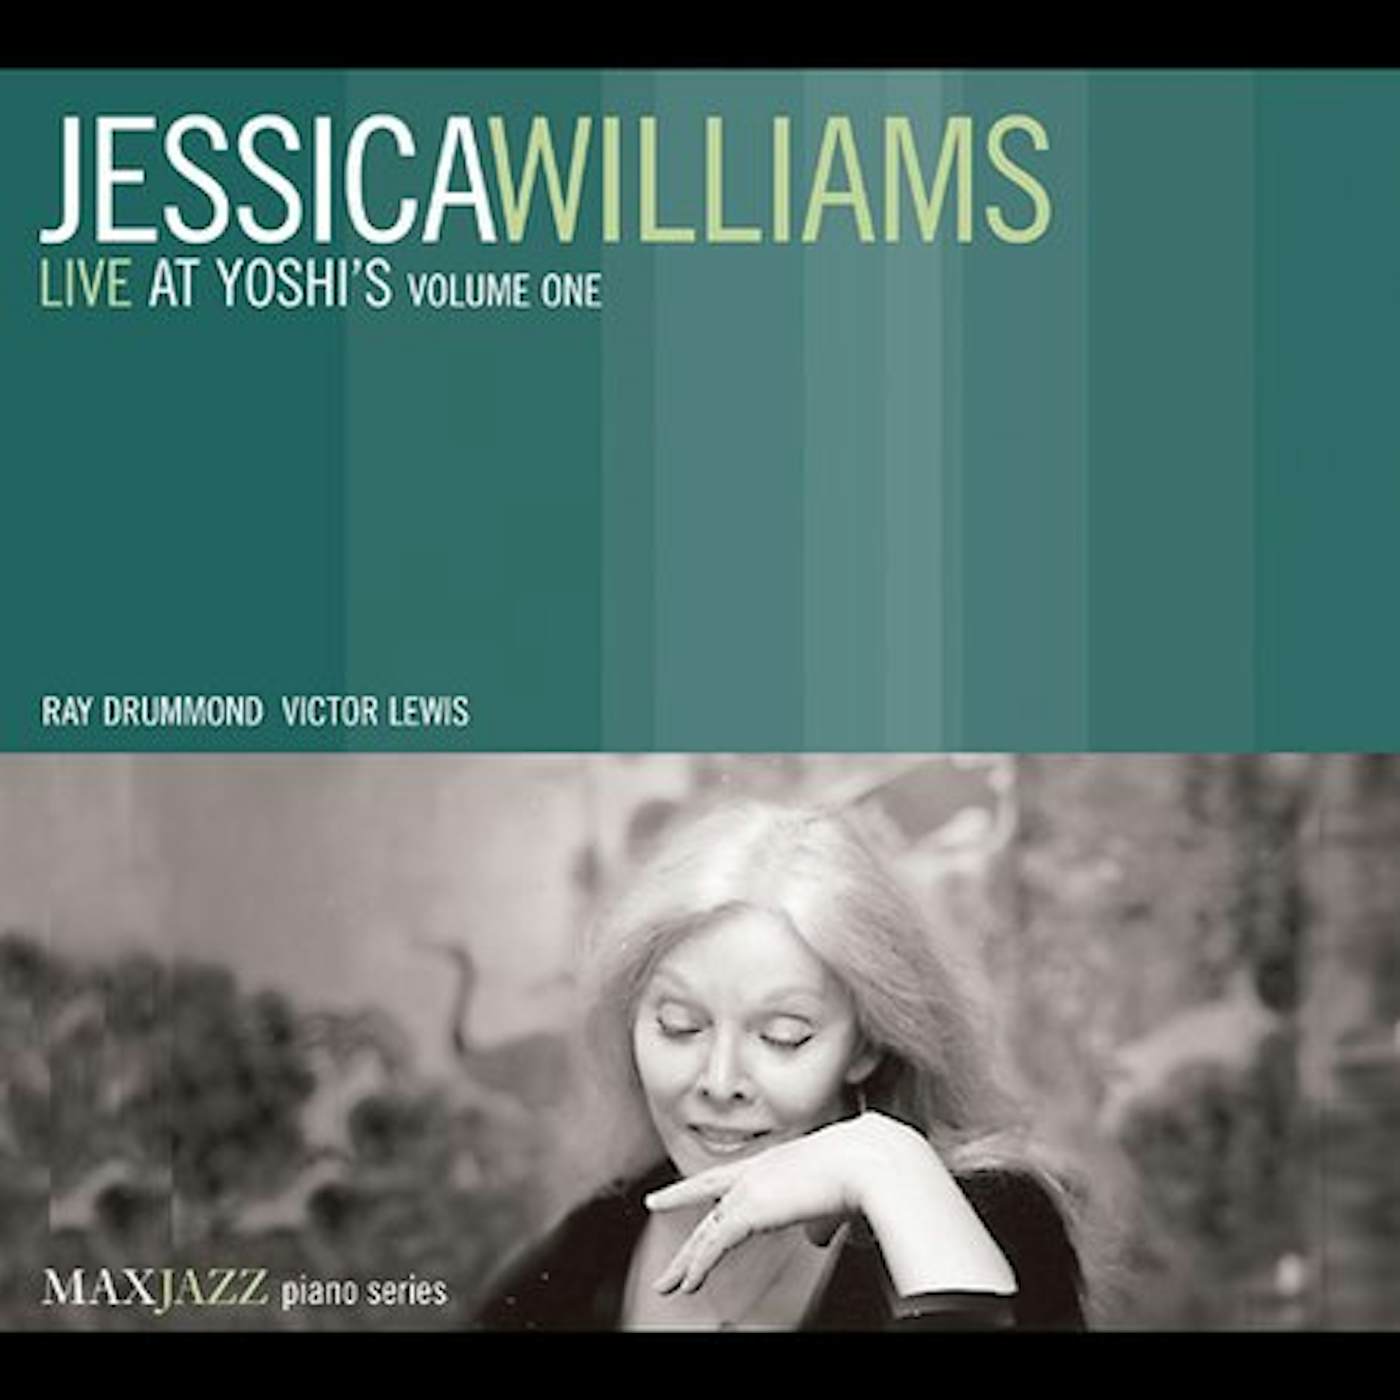 Jessica Williams LIVE AT YOSHI'S 1 CD